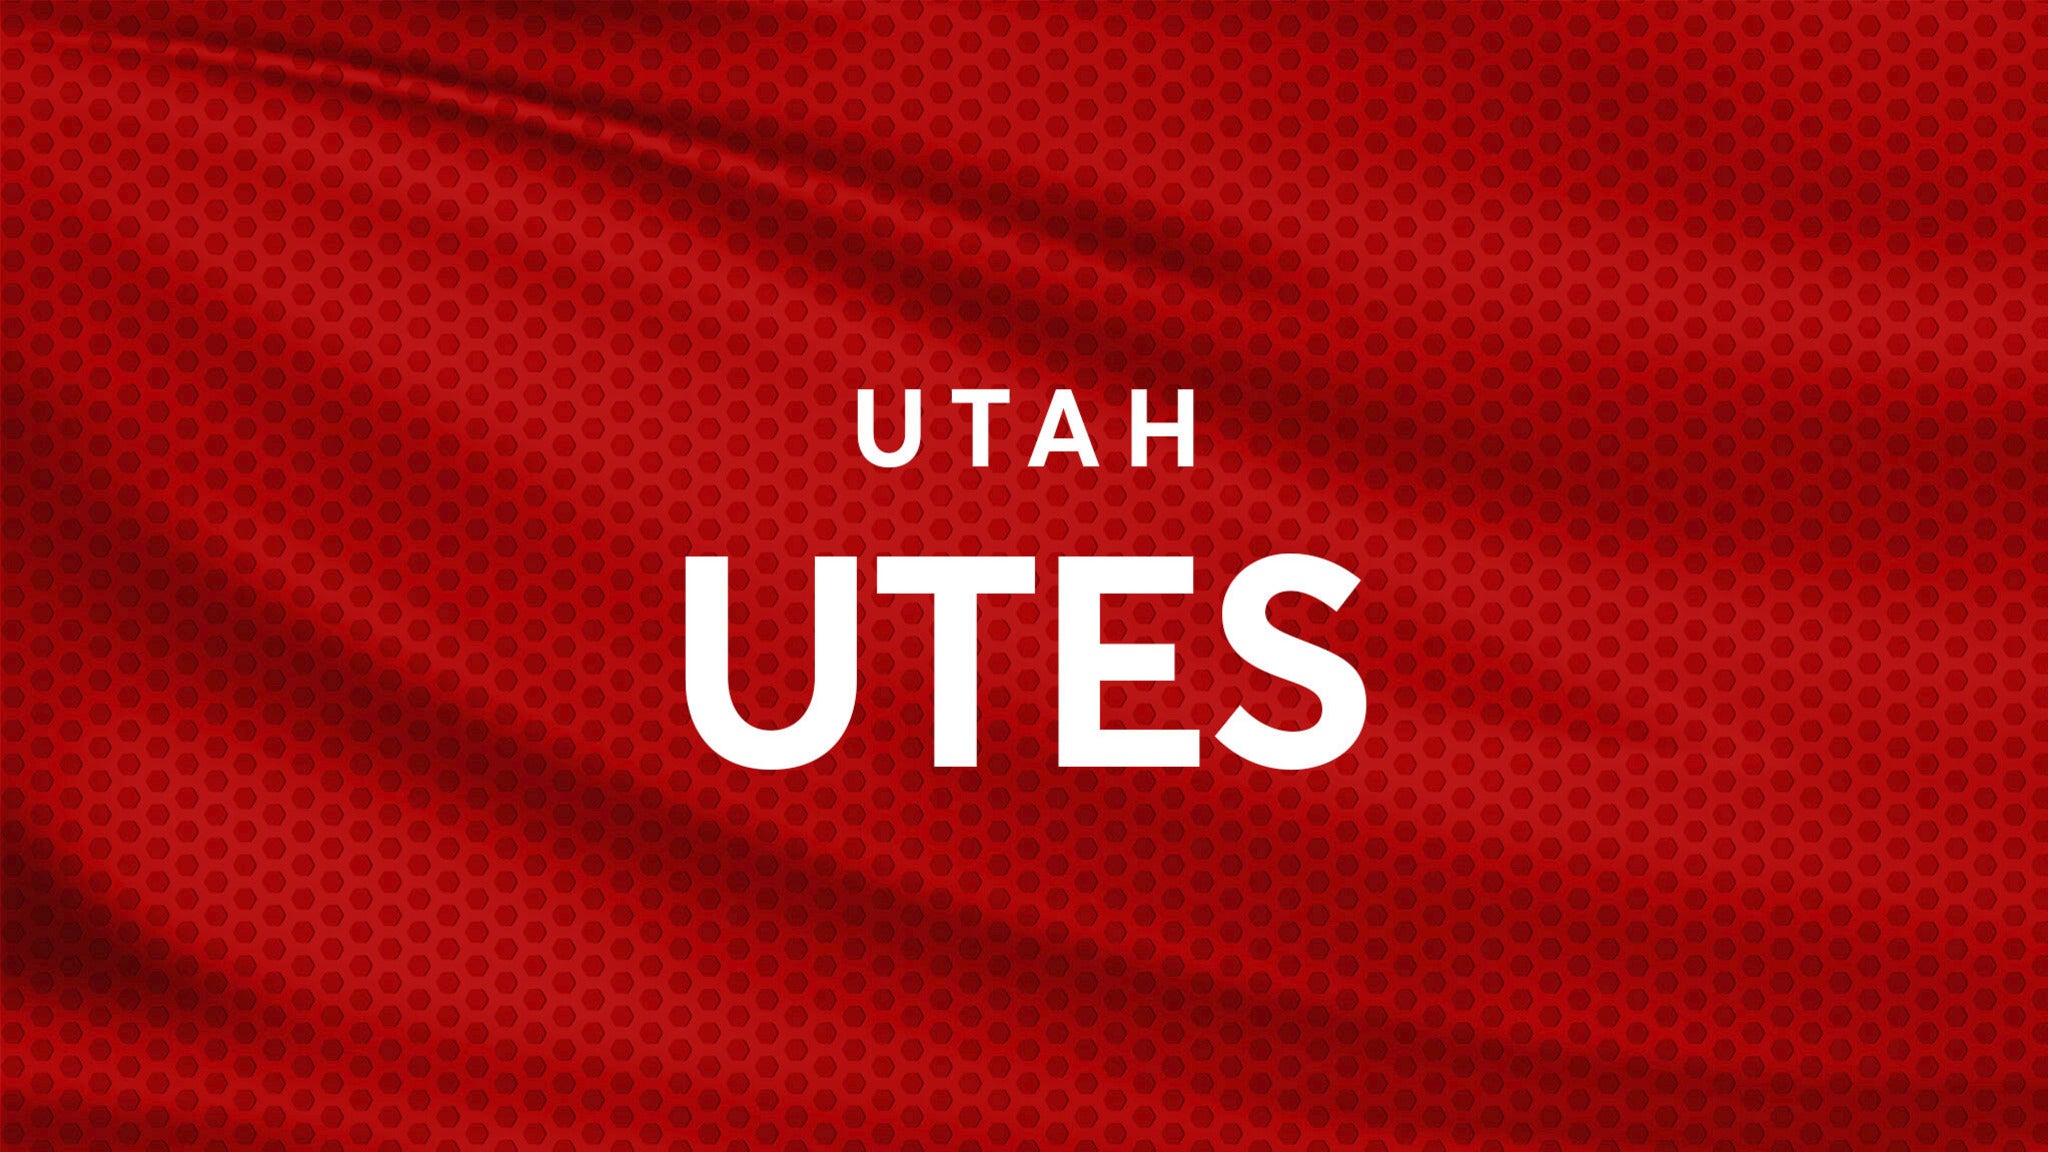 University of Utah Utes Mens Basketball presale information on freepresalepasswords.com